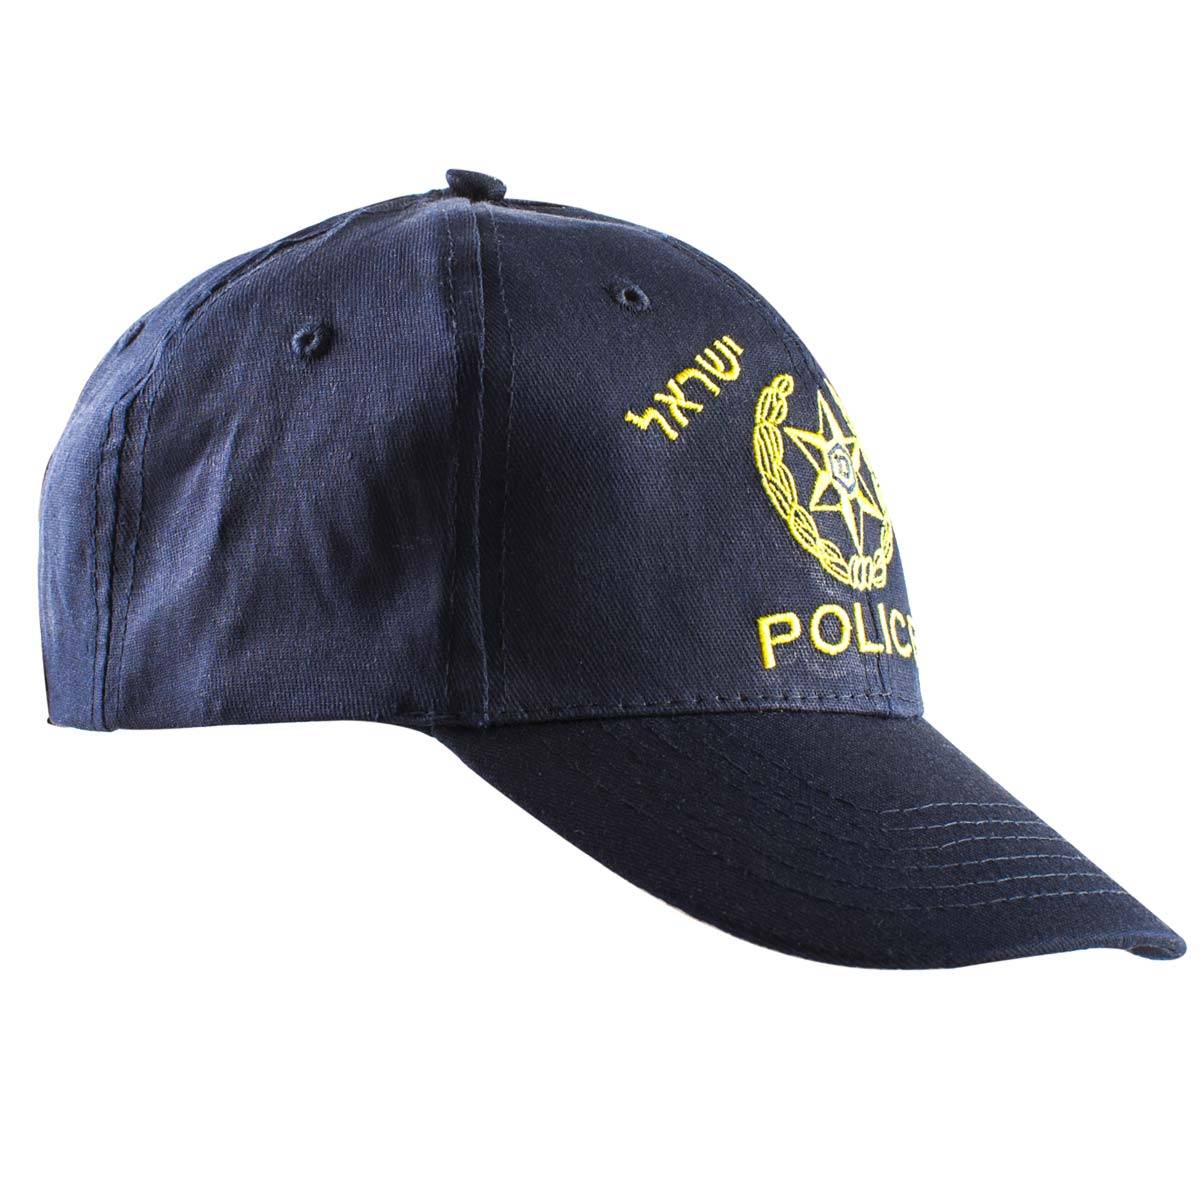 Police Cap Logo - Israel Police Emblem Embroidered Ball Cap